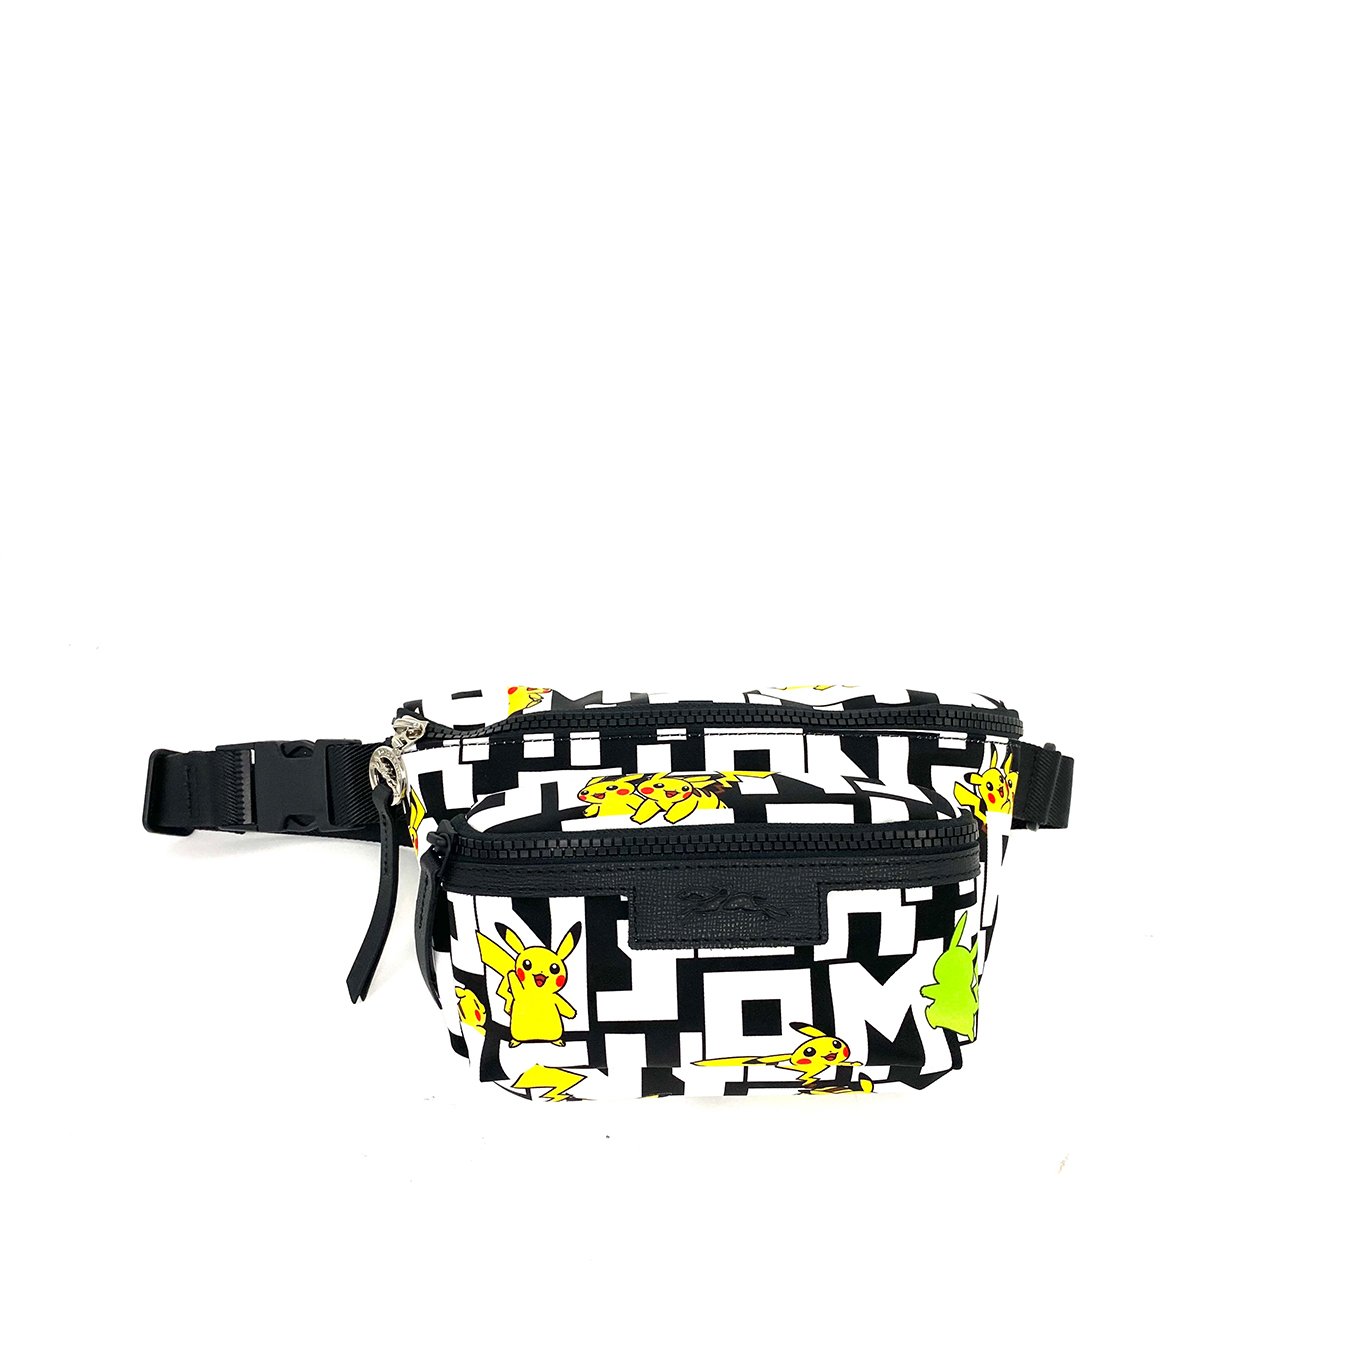 Longchamp X Pokémon Le Pliage Collection Pikachu Belt Bag Black/White